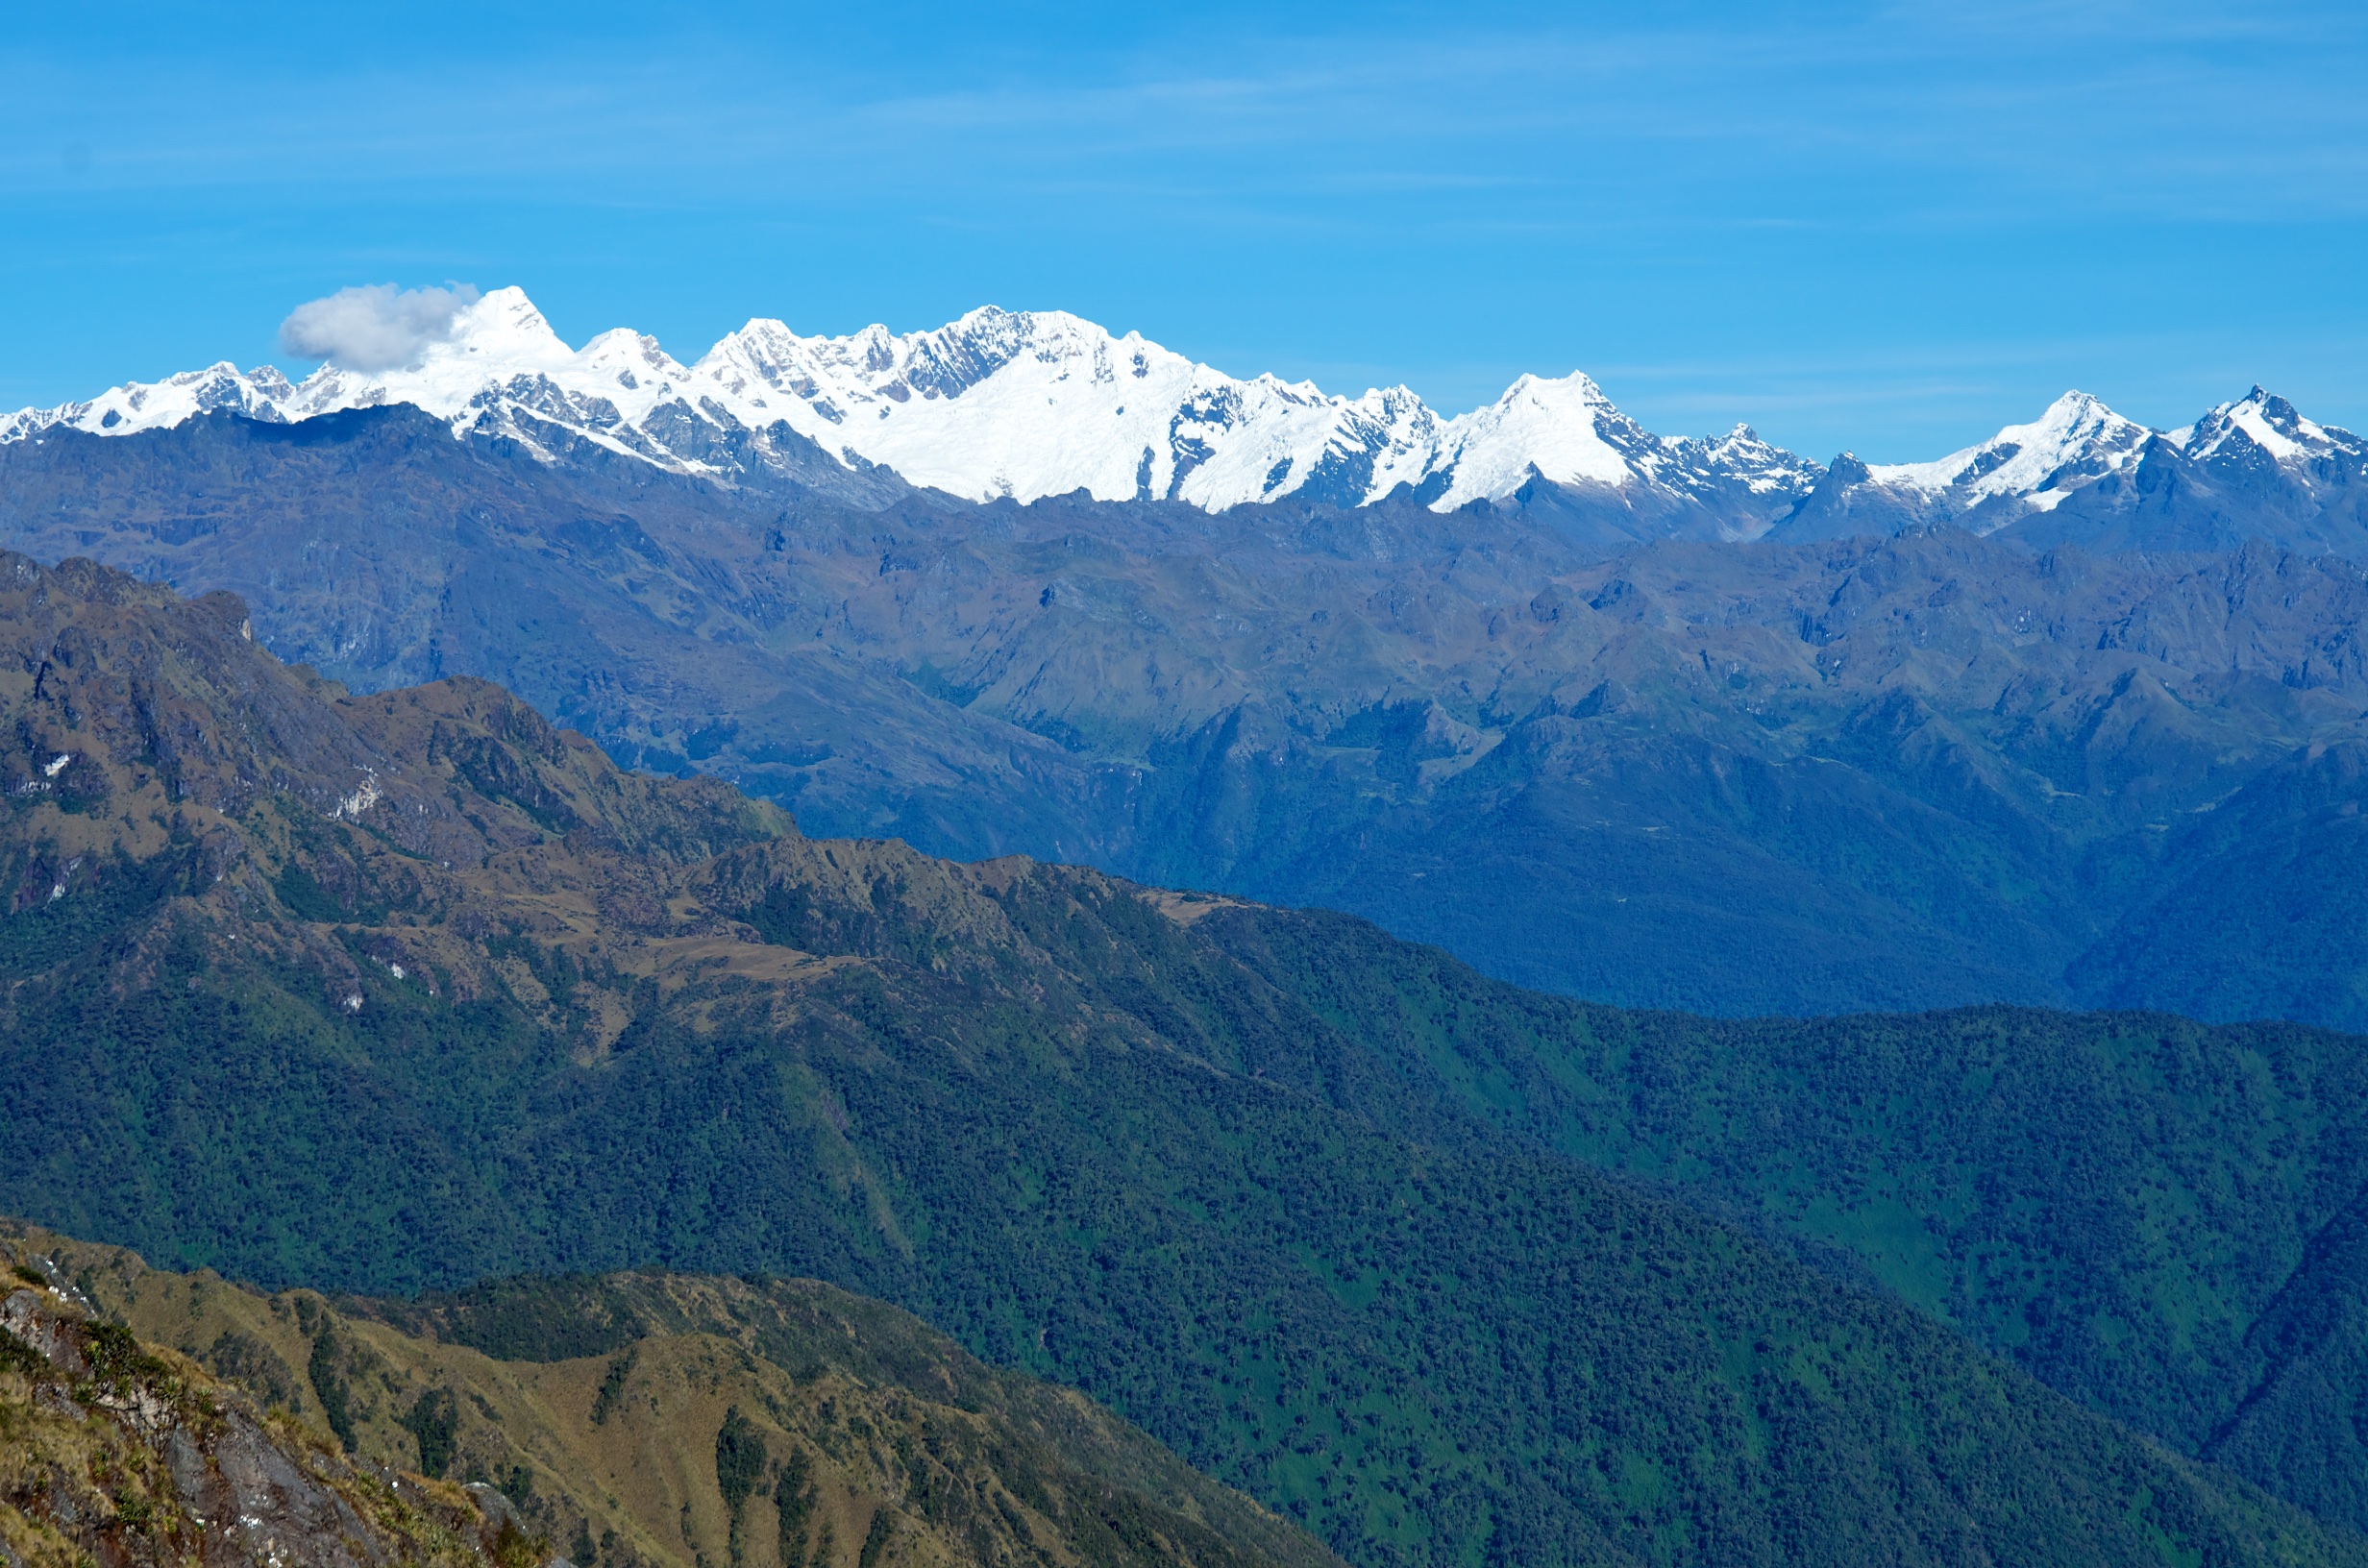  View from Runkuraqay Pass (3780m), Inca Trail, Peru 